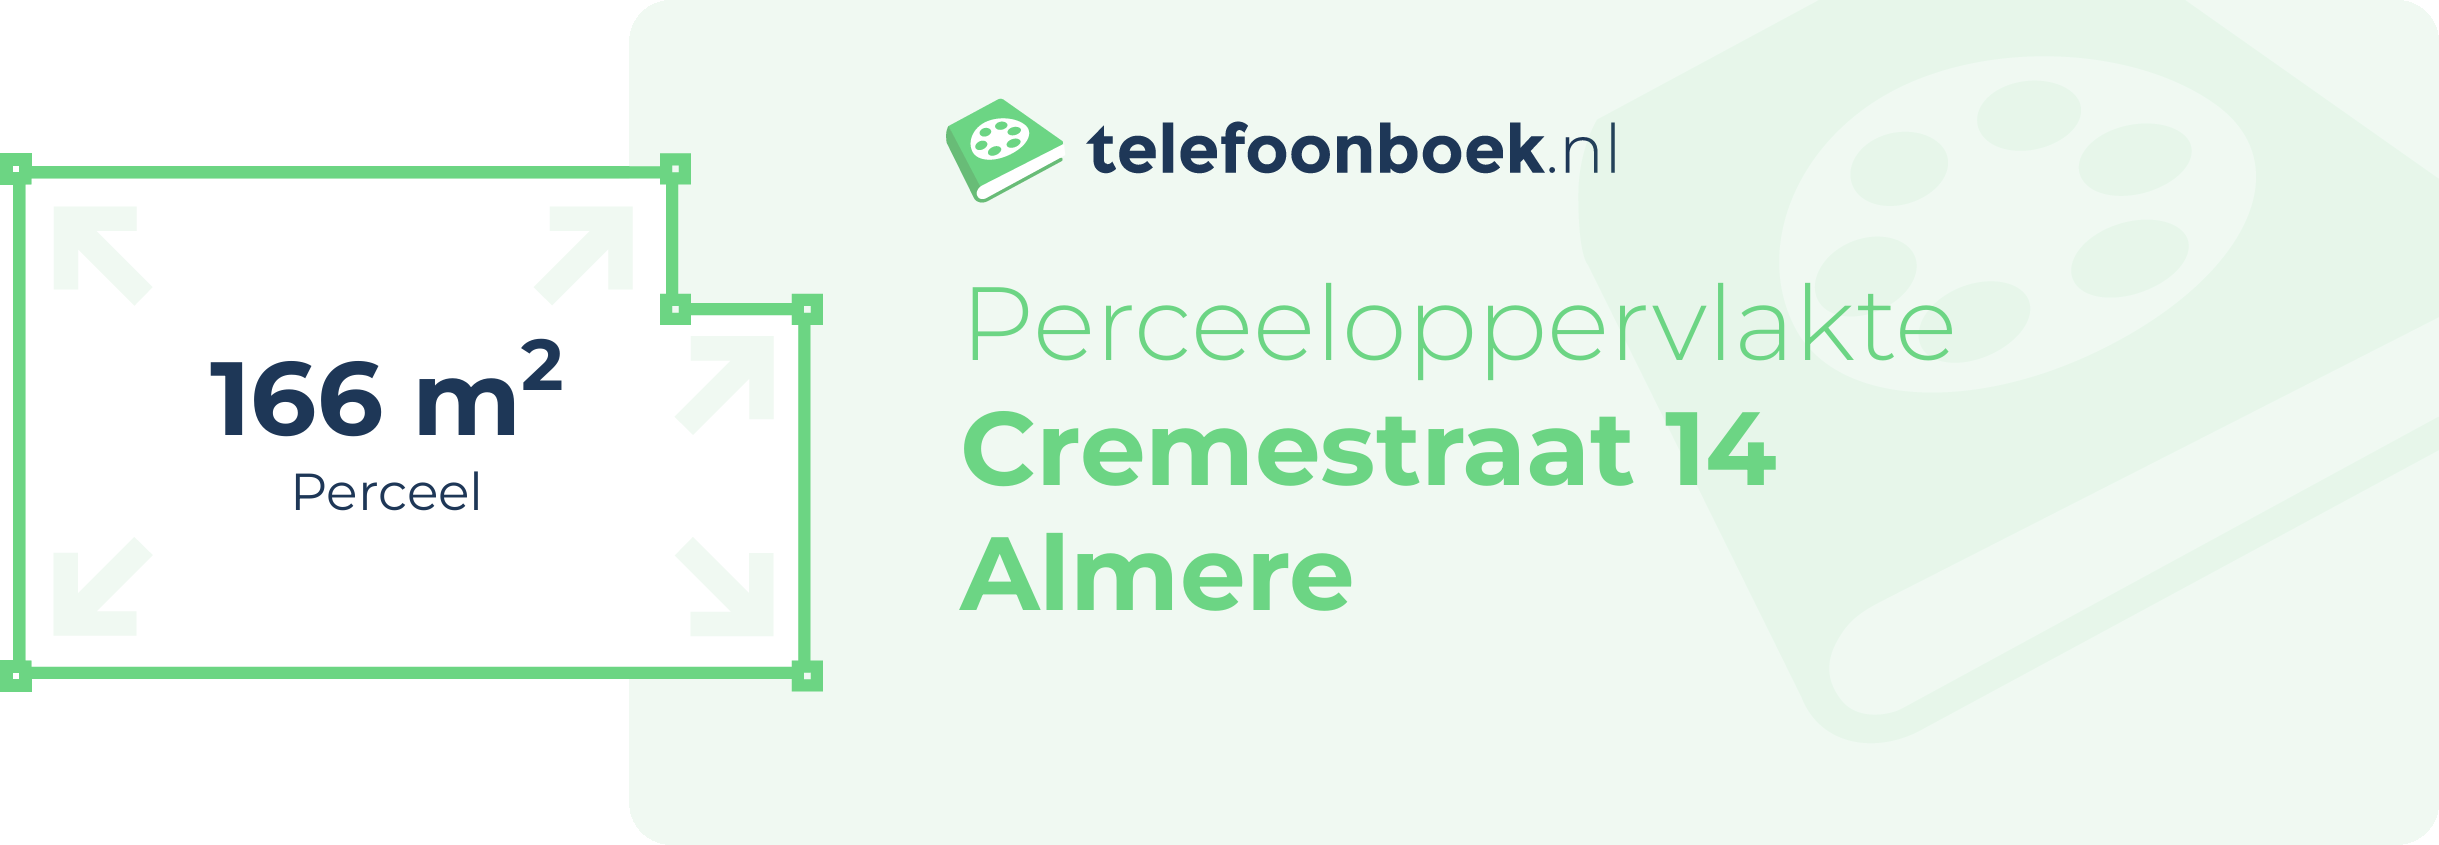 Perceeloppervlakte Cremestraat 14 Almere